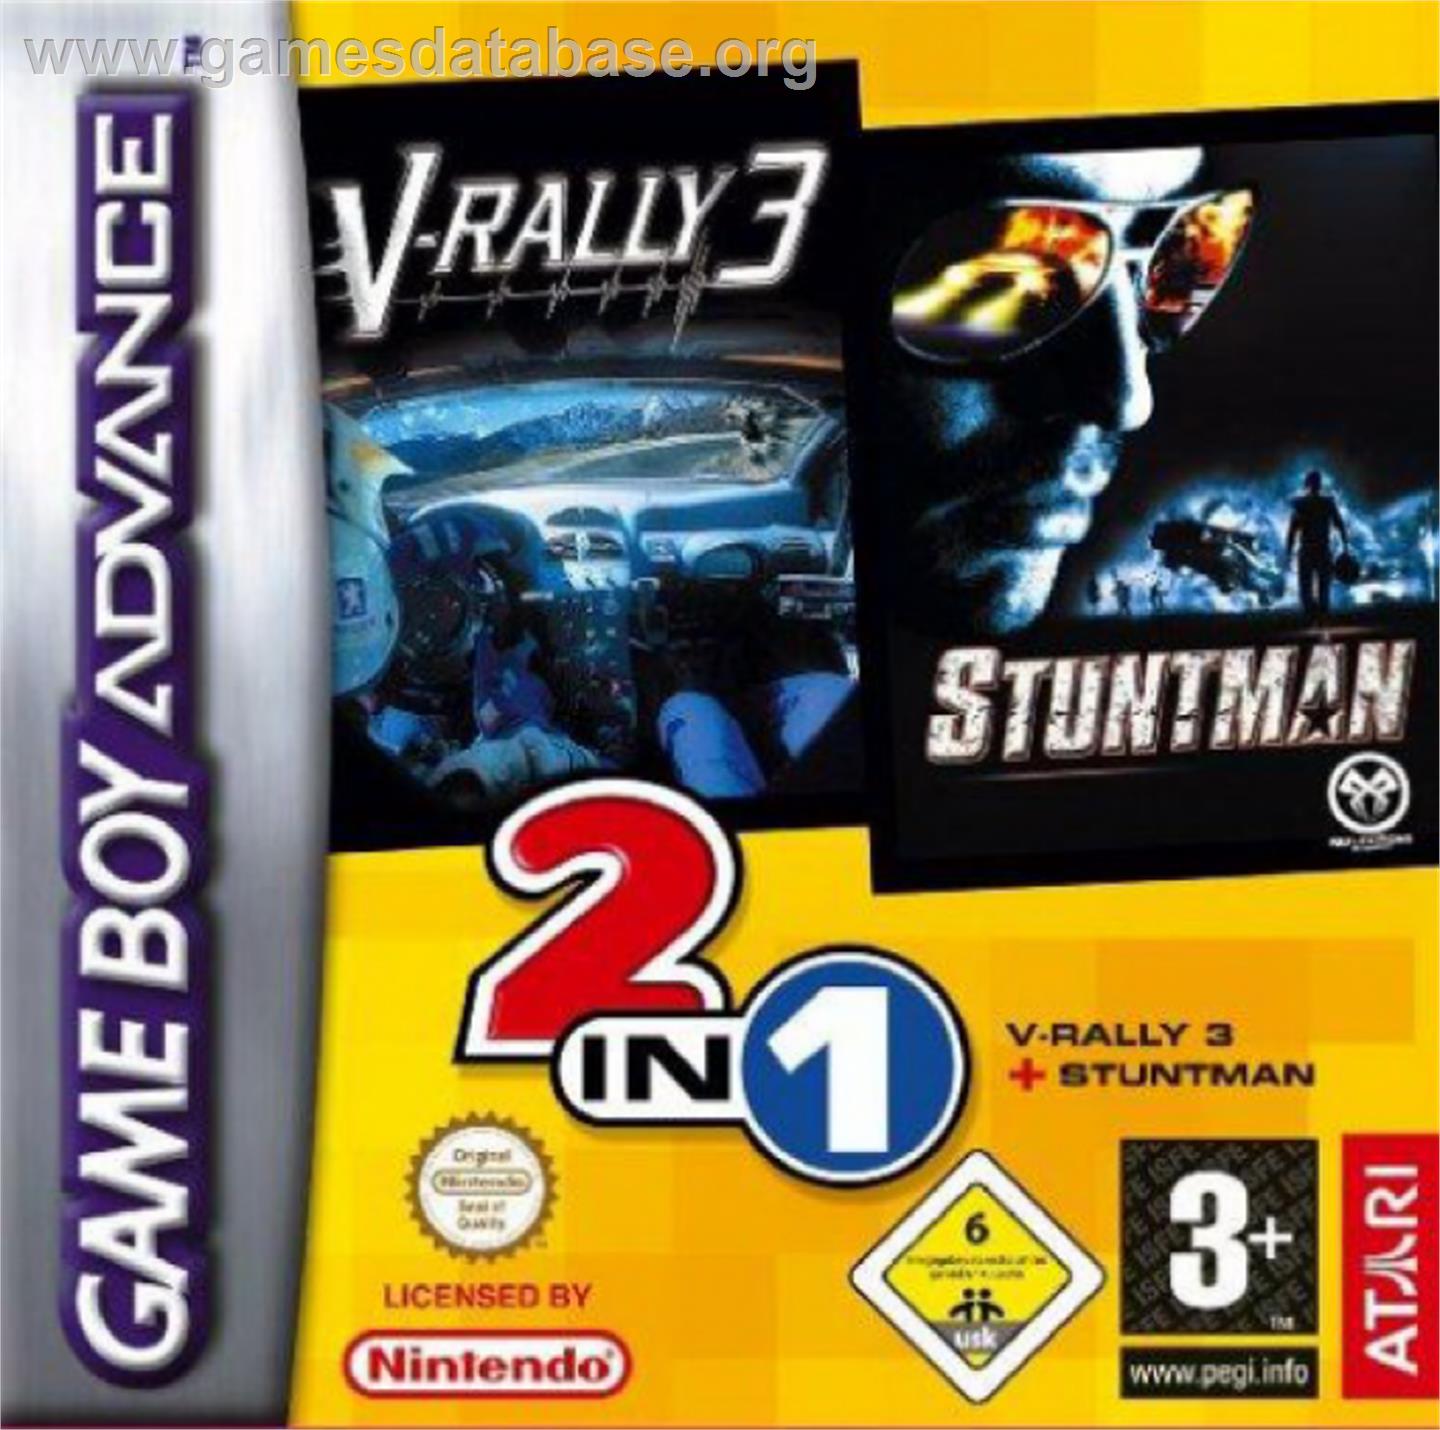 2 in 1: V-Rally 3 & Stuntman - Nintendo Game Boy Advance - Artwork - Box